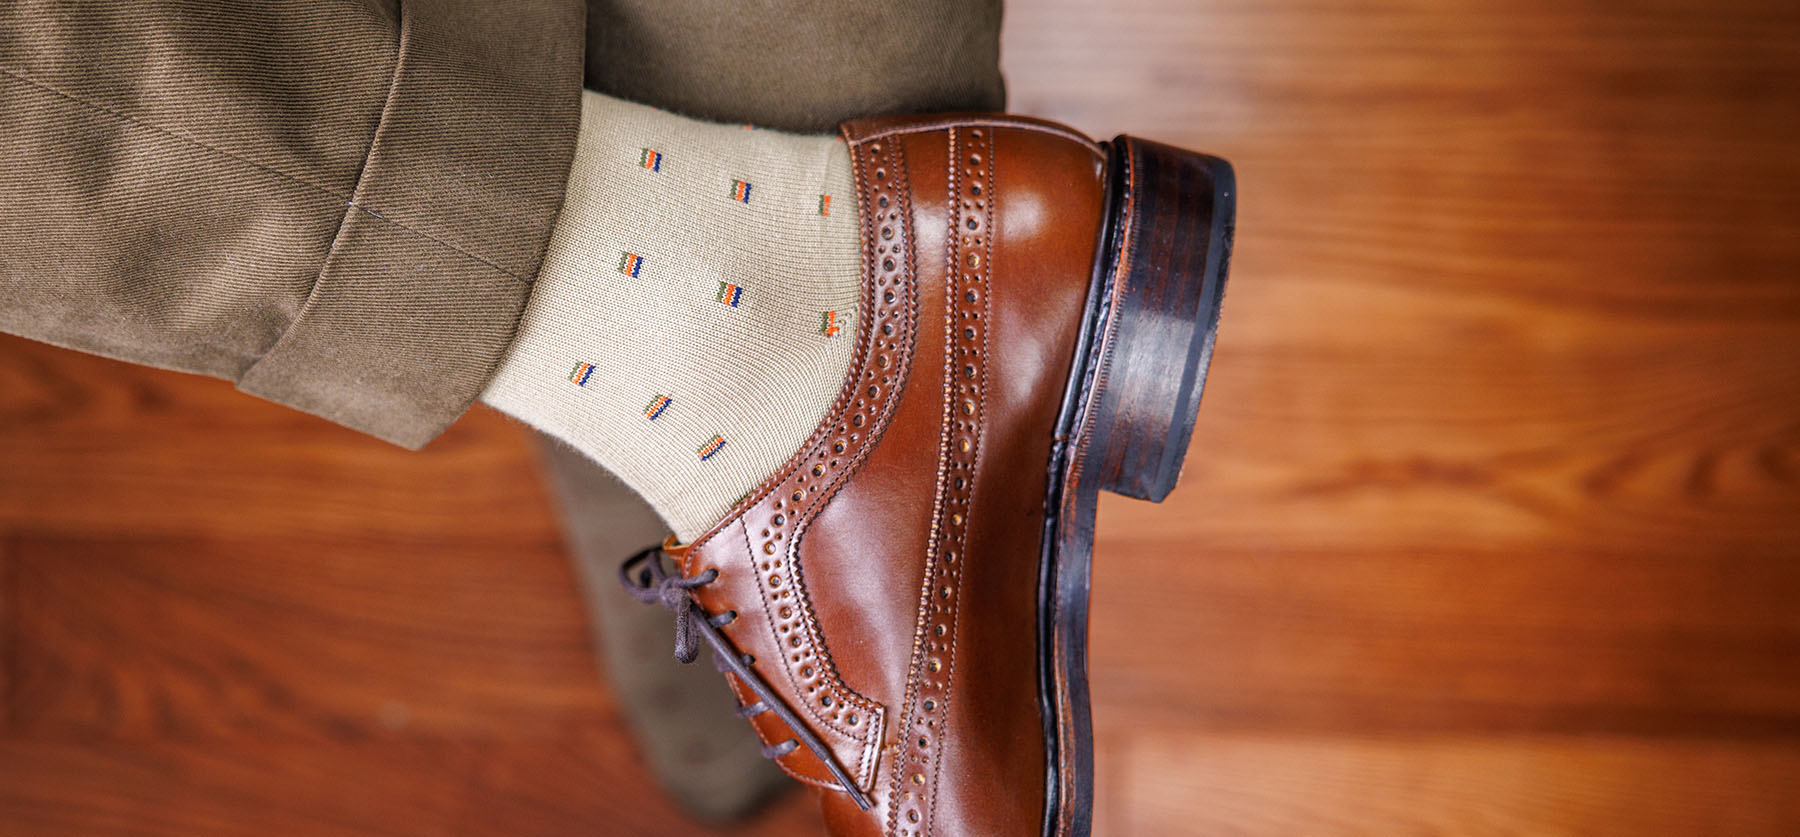 man wearing khaki dress socks with polished brown dress shoes and dark khaki slacks crossing legs